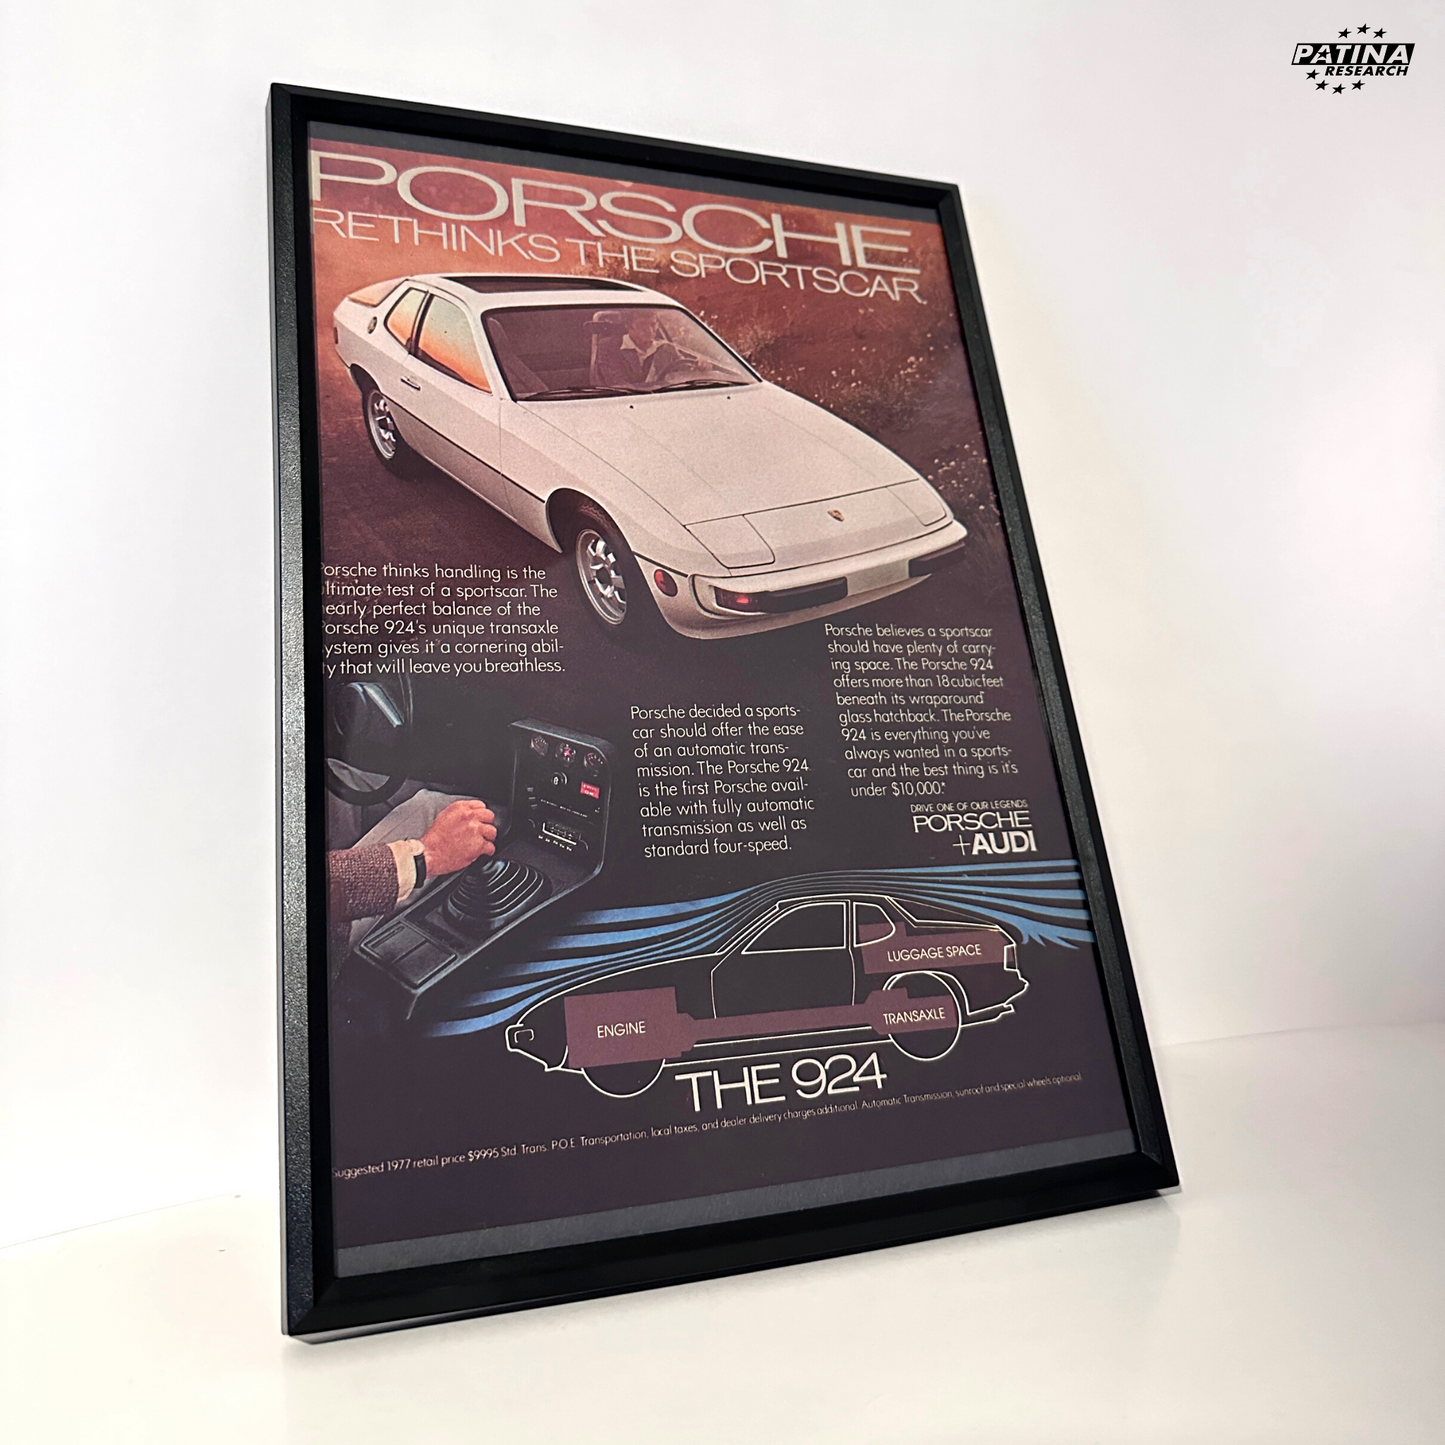 Porsche 924 rethinks the sportscar framed ad